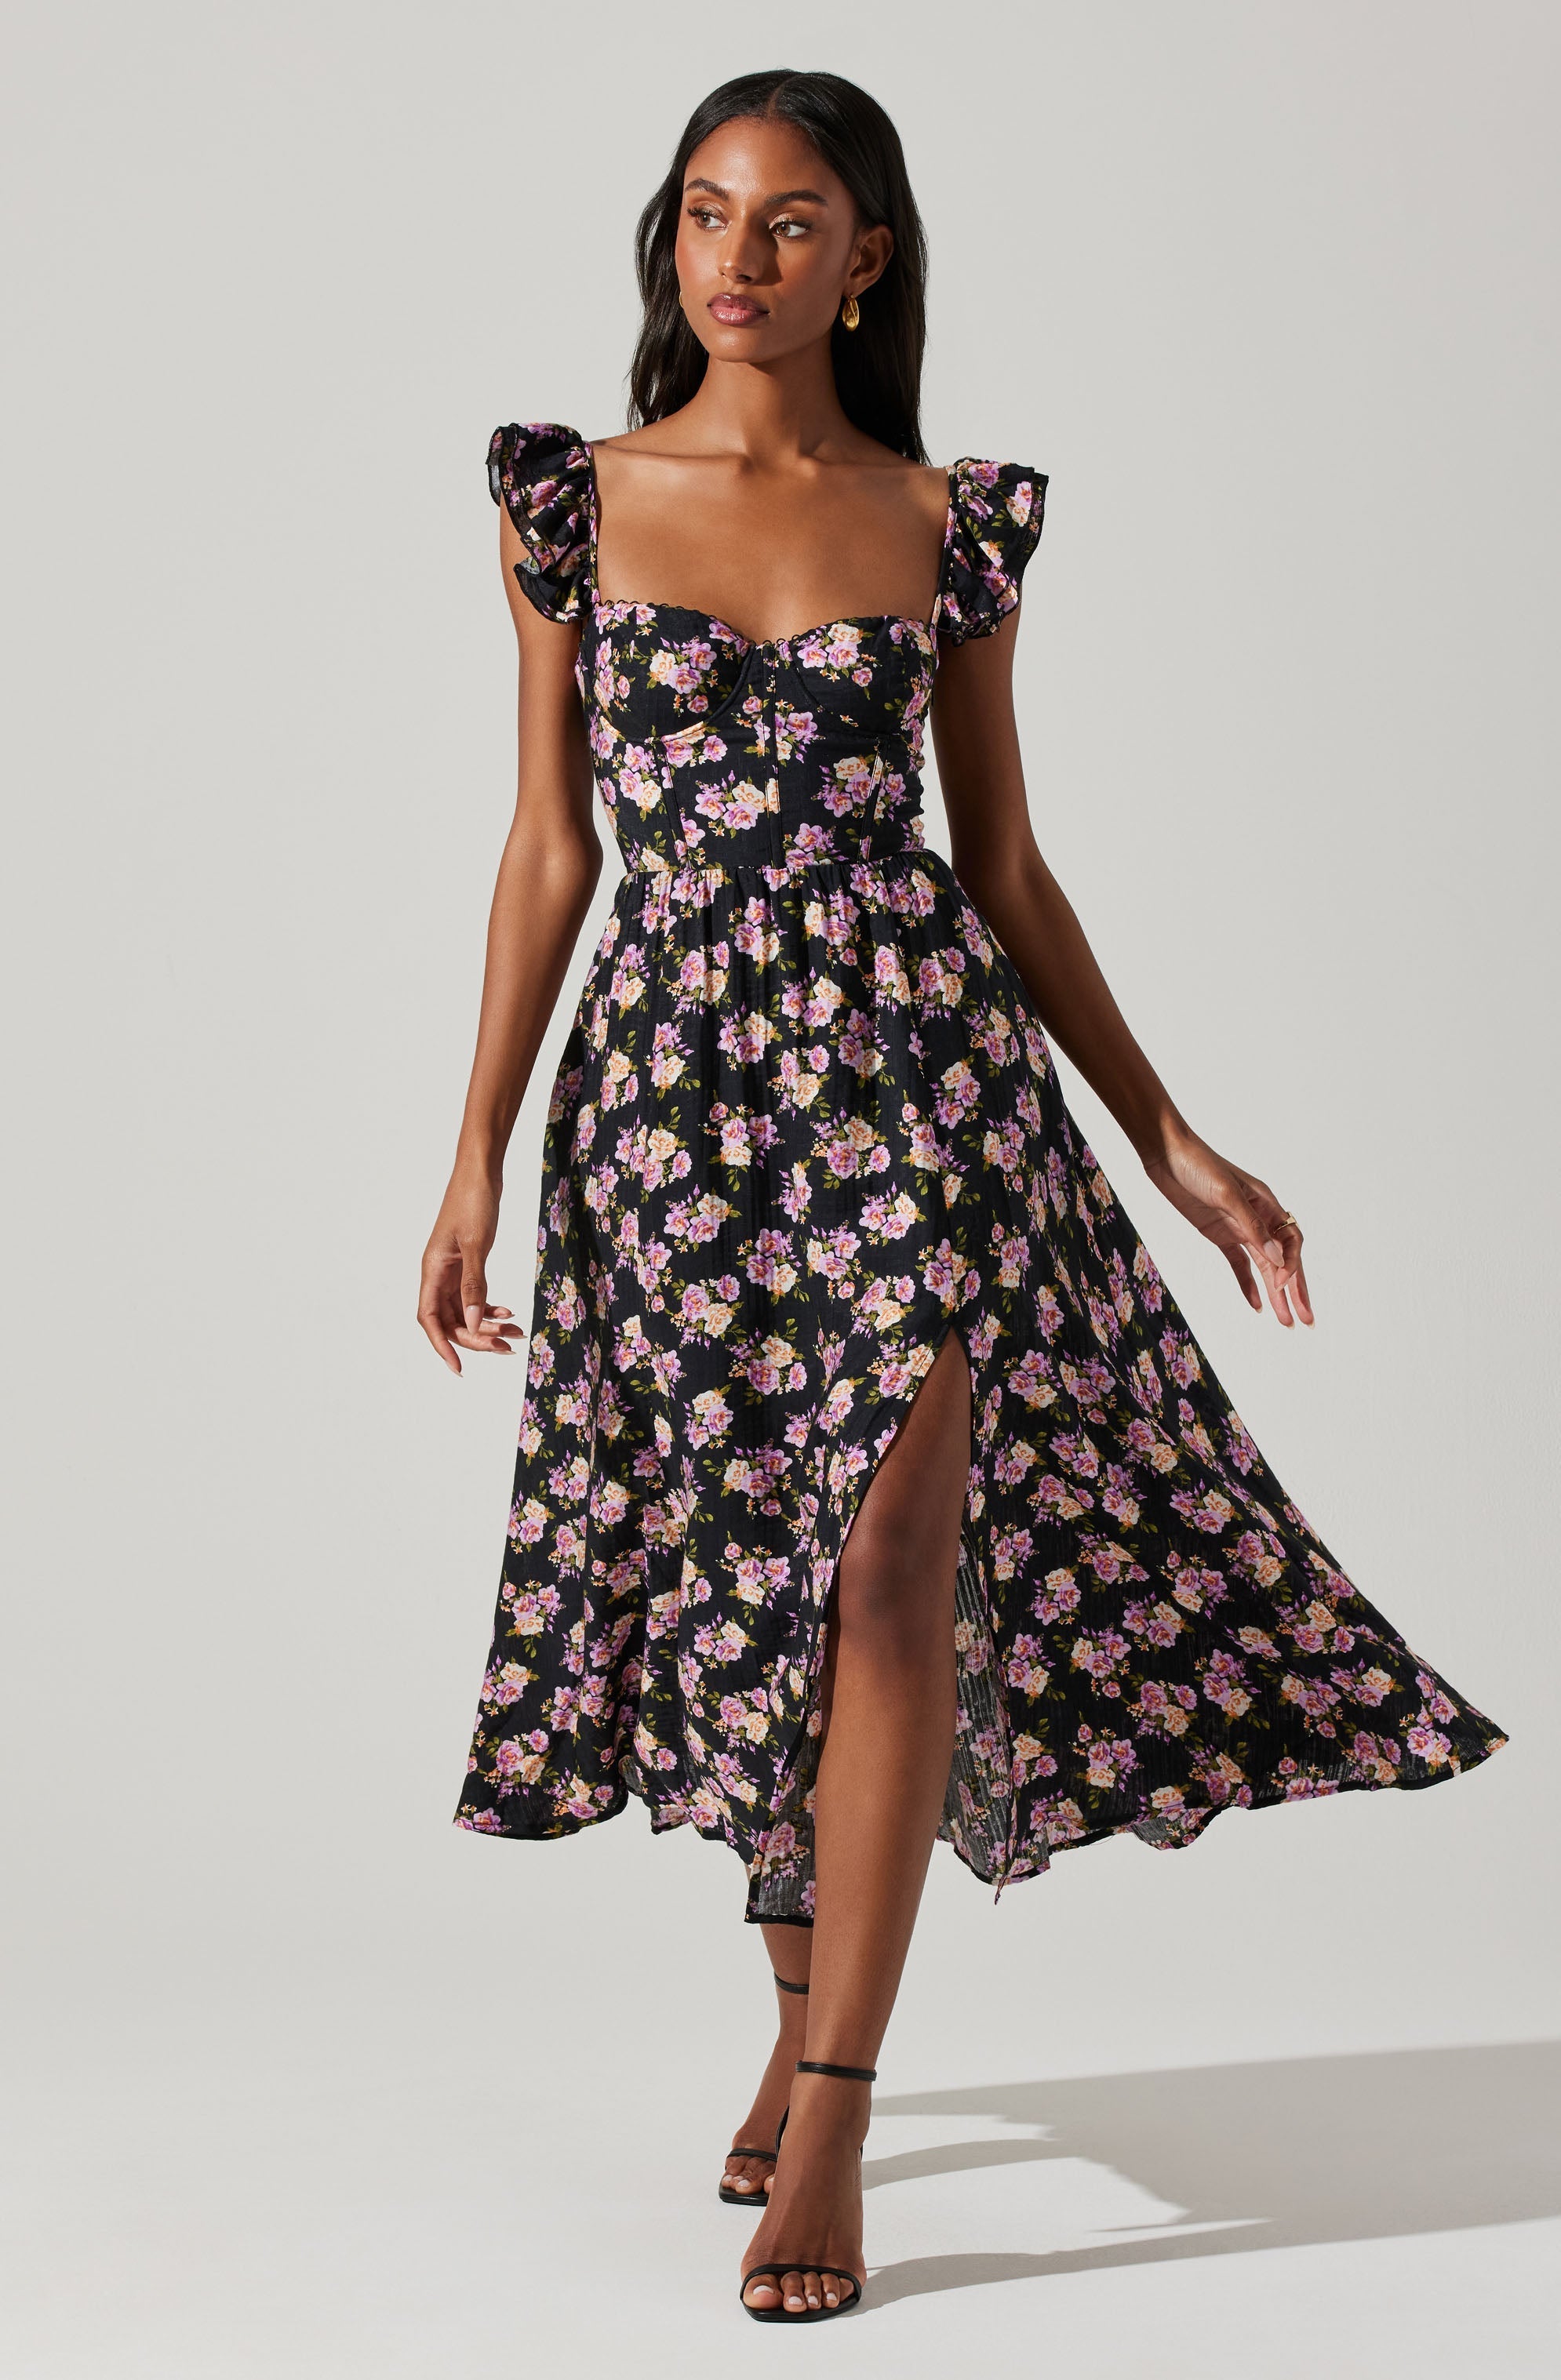 Black Floral Maxi Dress - Floral Bustier Dress - Satin Maxi Dress